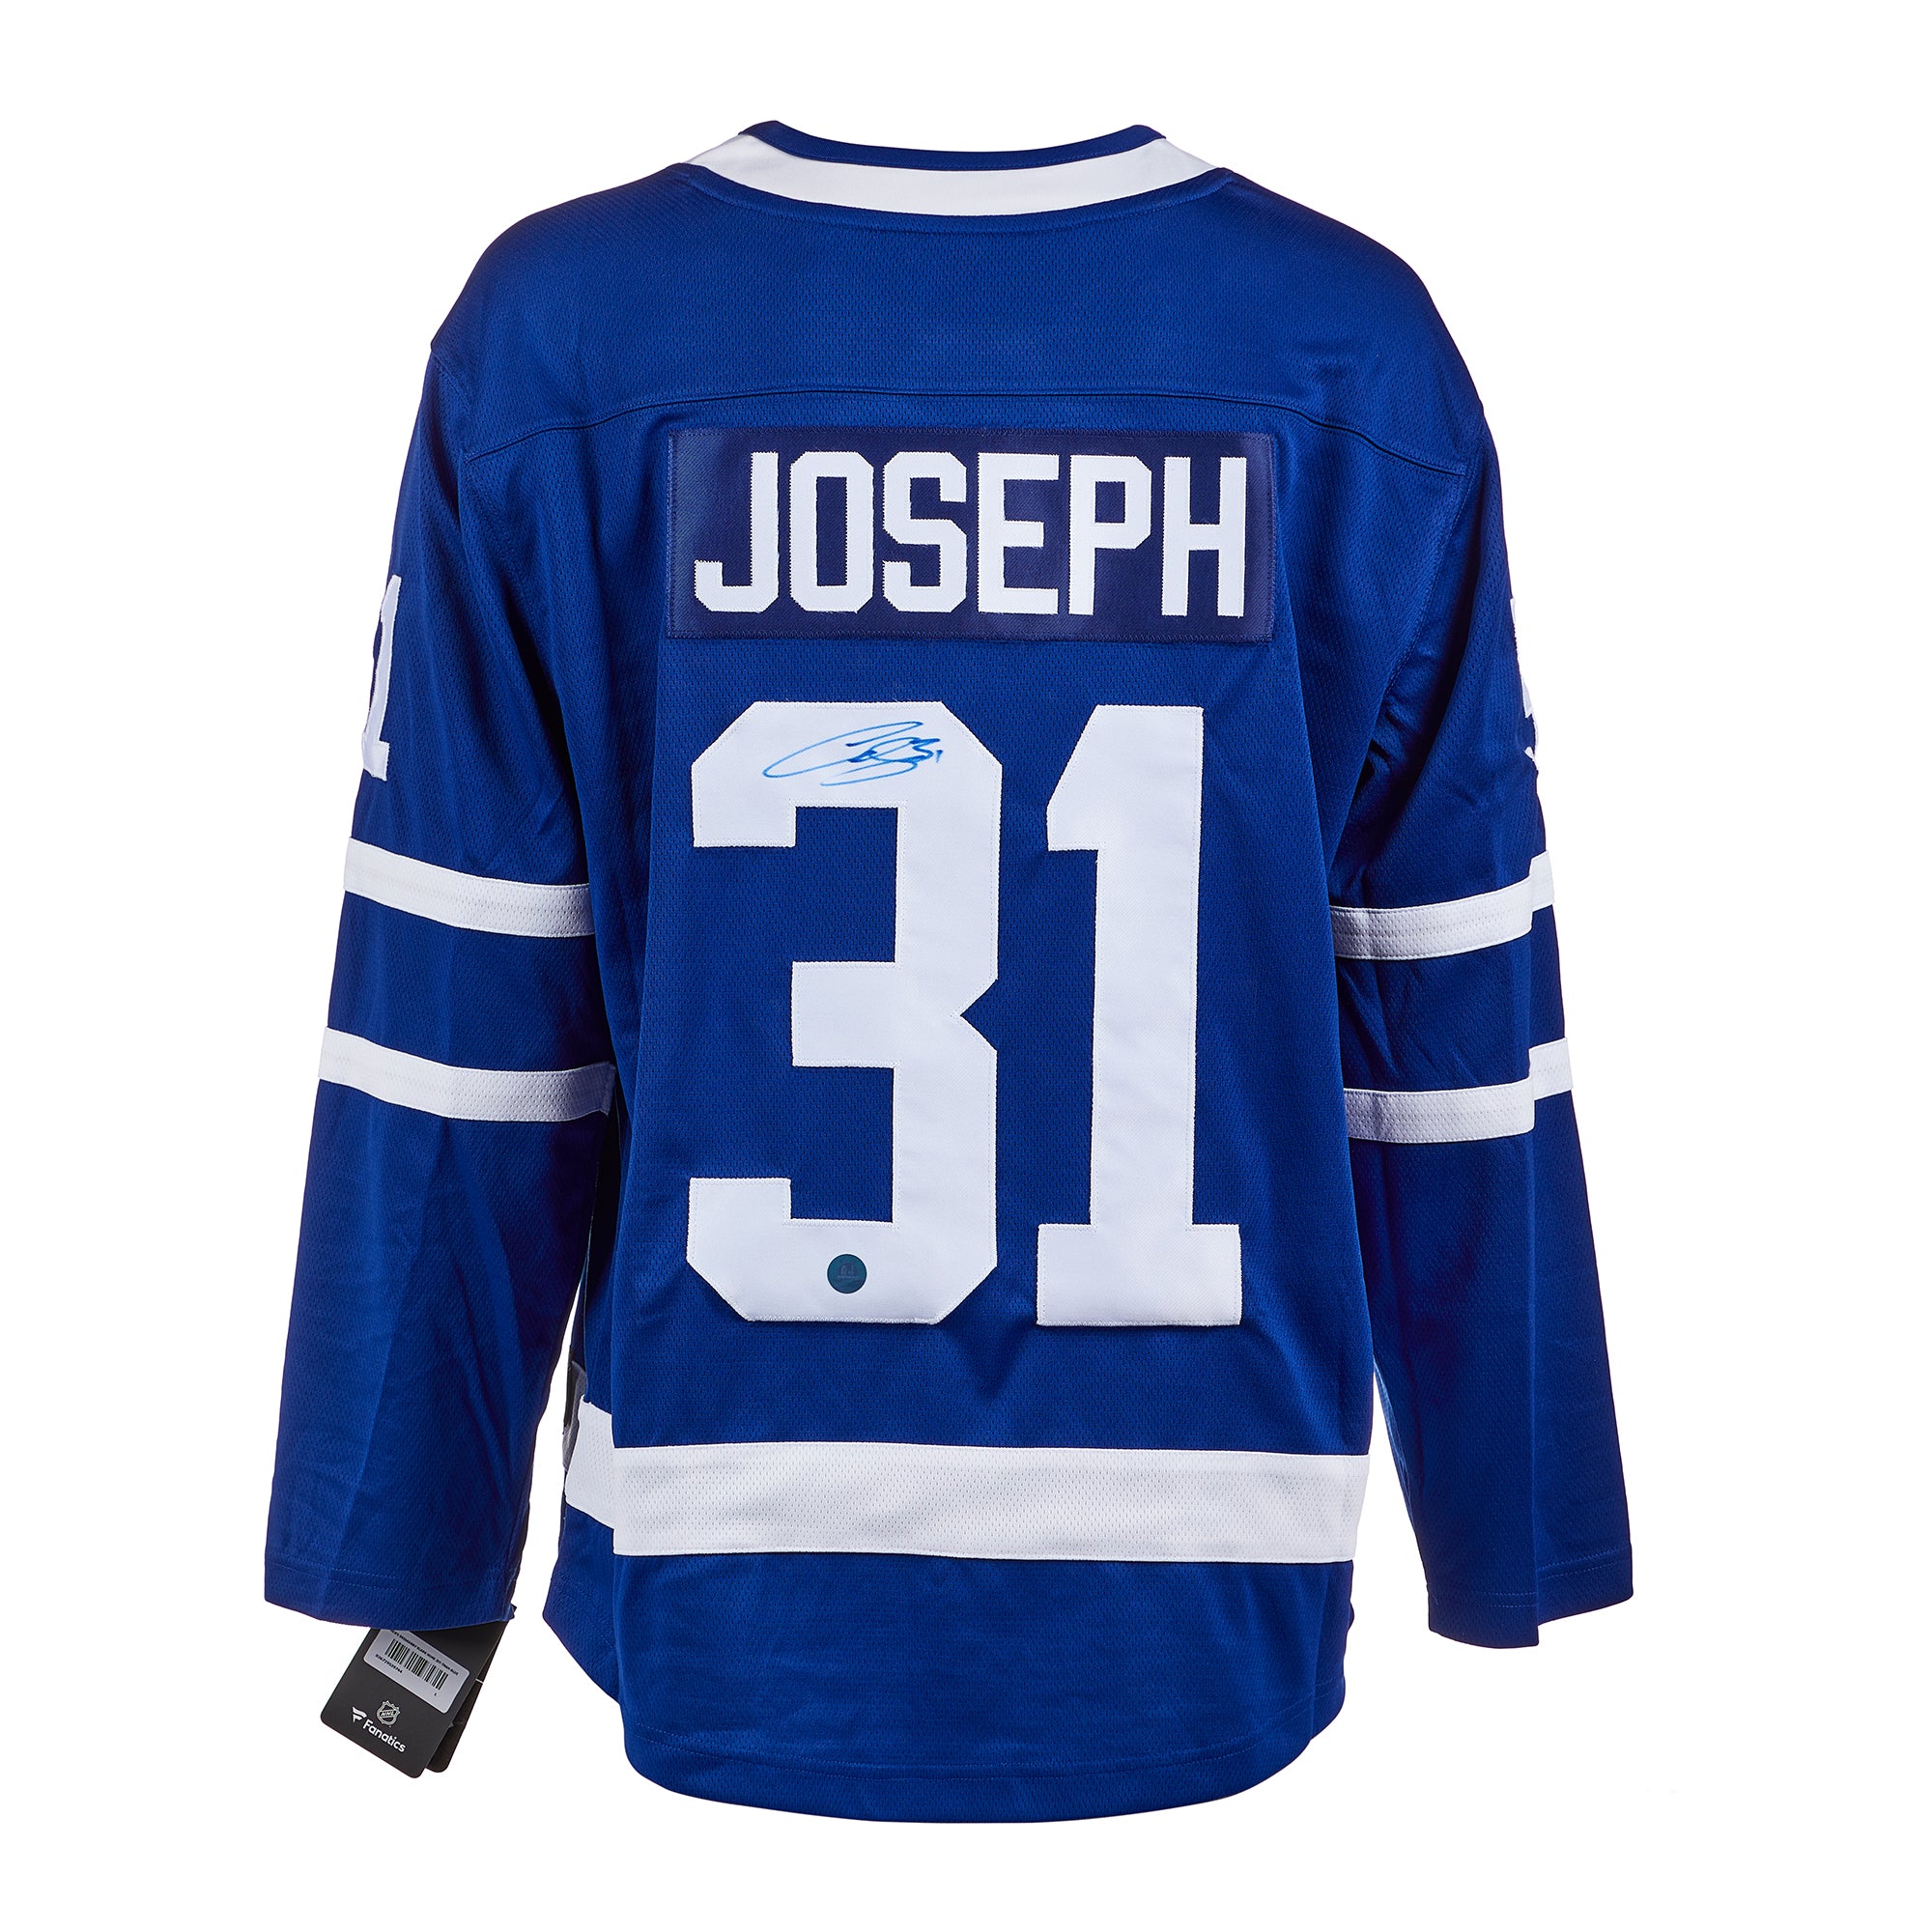 31 Curtis Joseph Autographed Jersey - NHL Auctions